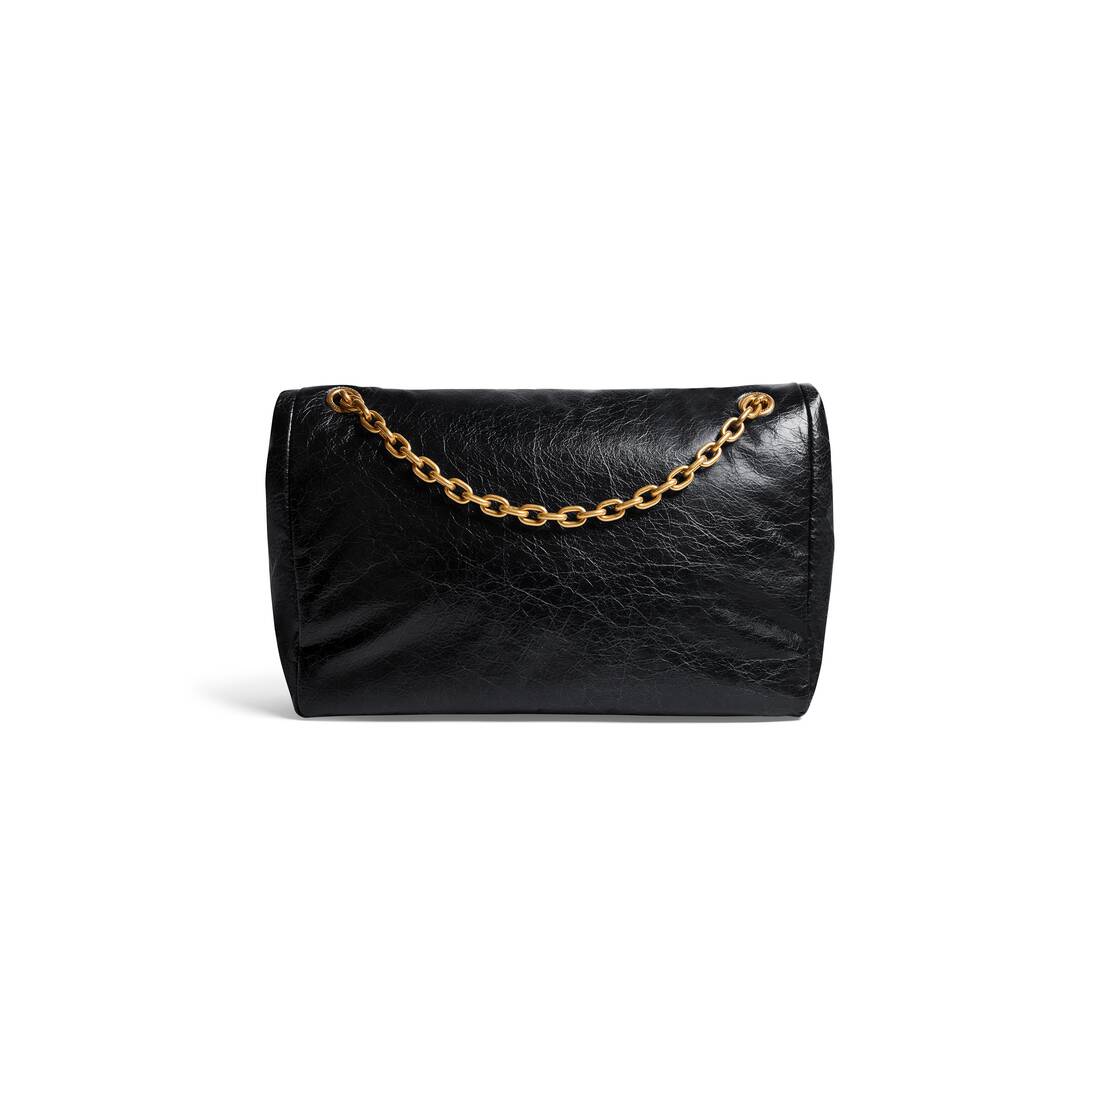 Balenciaga Monaco Medium Quilted Chain Shoulder Bag - Black/Silver